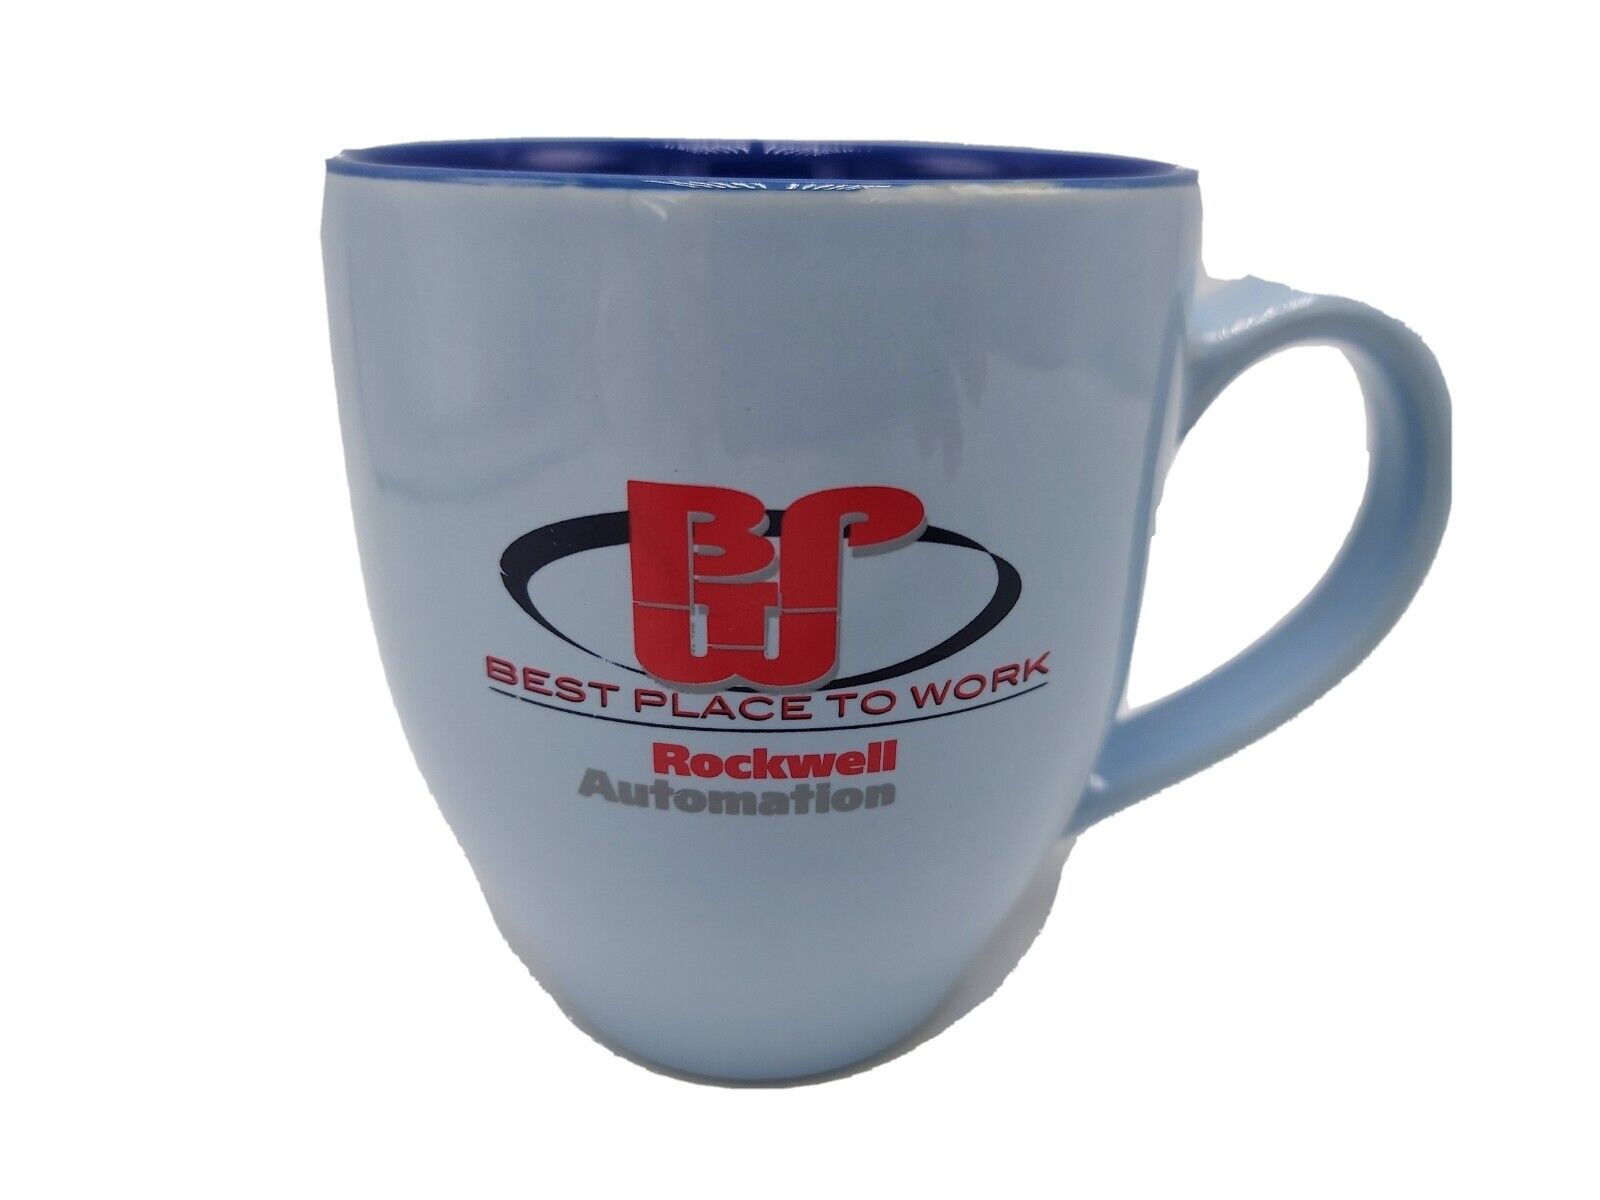 Rockwell Automation Powder Blue Coffee Mug Cup 14 Ounces